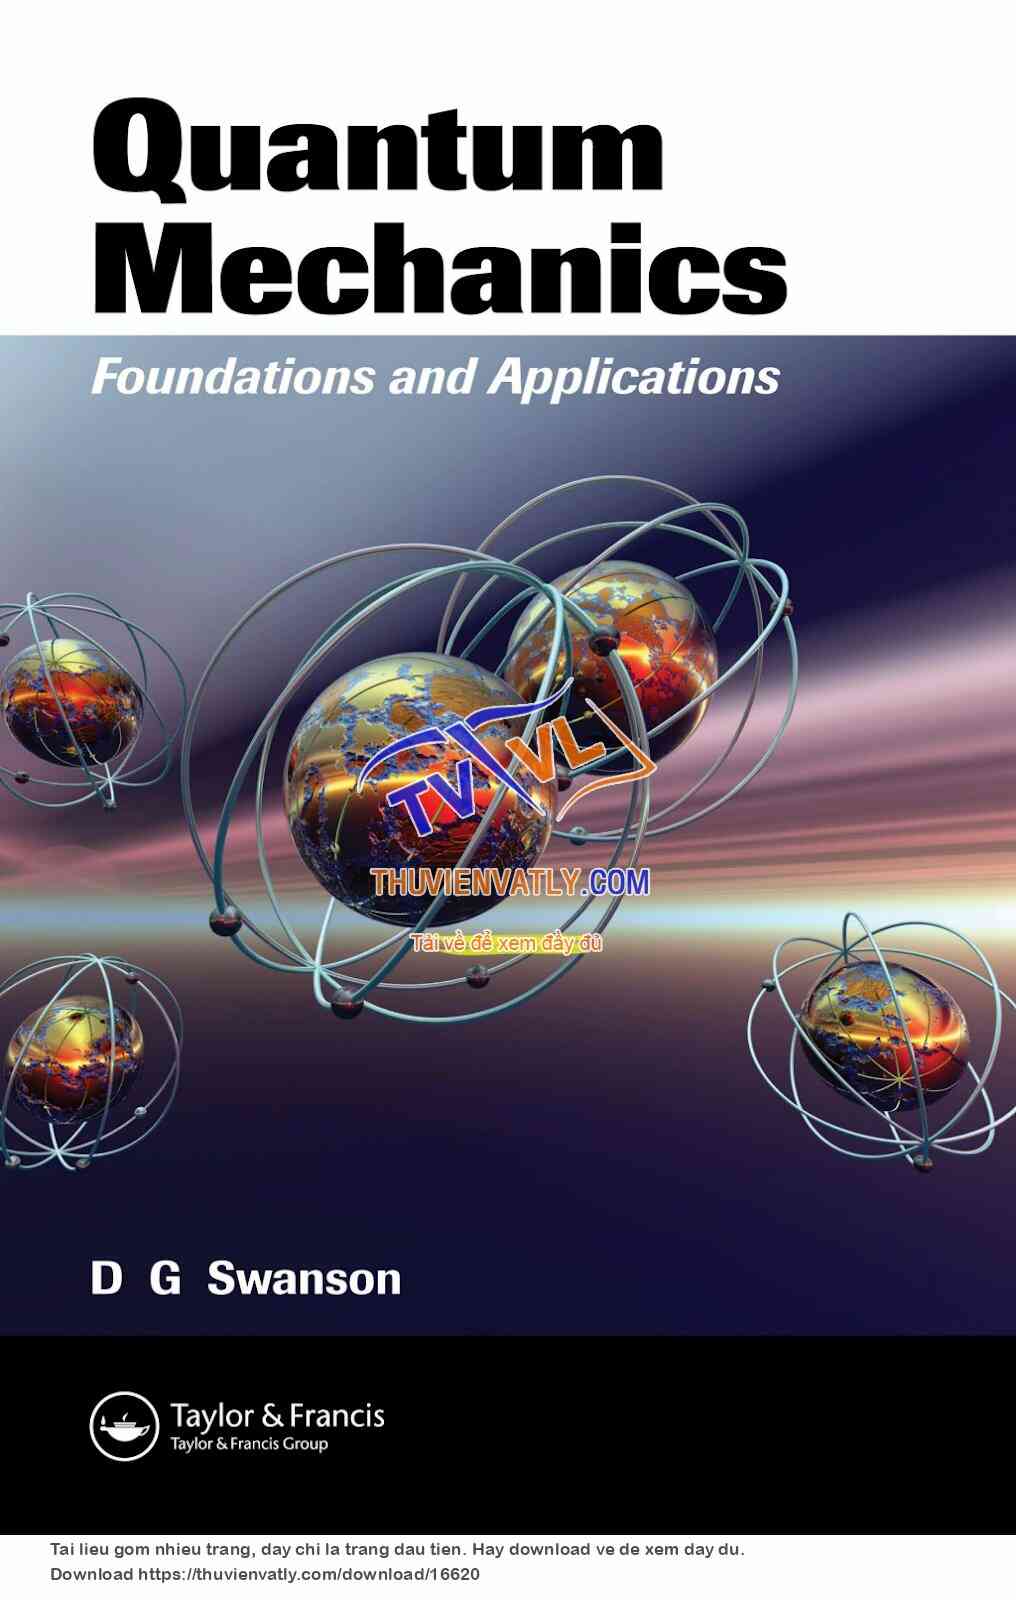 Quantum Mechanics Foundations and Applications (D  G  Swanson, Taylor & Francis 2007)